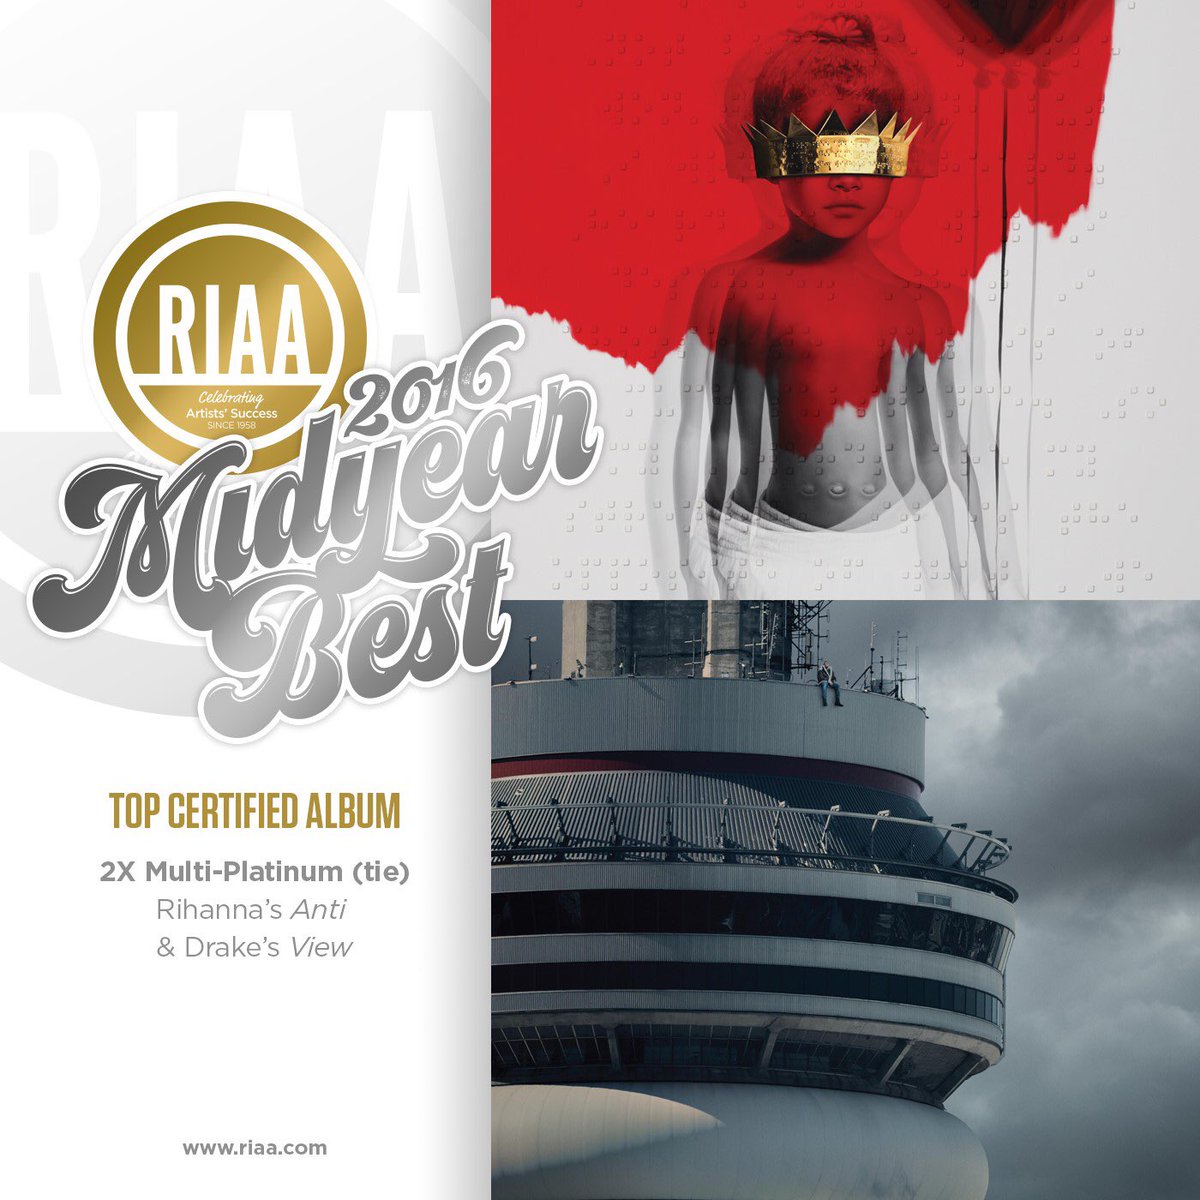 RT @RIAA: #RIAAMIDYEARSBEST: Top Certified ALBUM Tie 2X multi-Platinum – @Rihanna’s #Anti ⚓️ & @Drake’s #Views???????? https://t.co/Gnat9Sb0MG